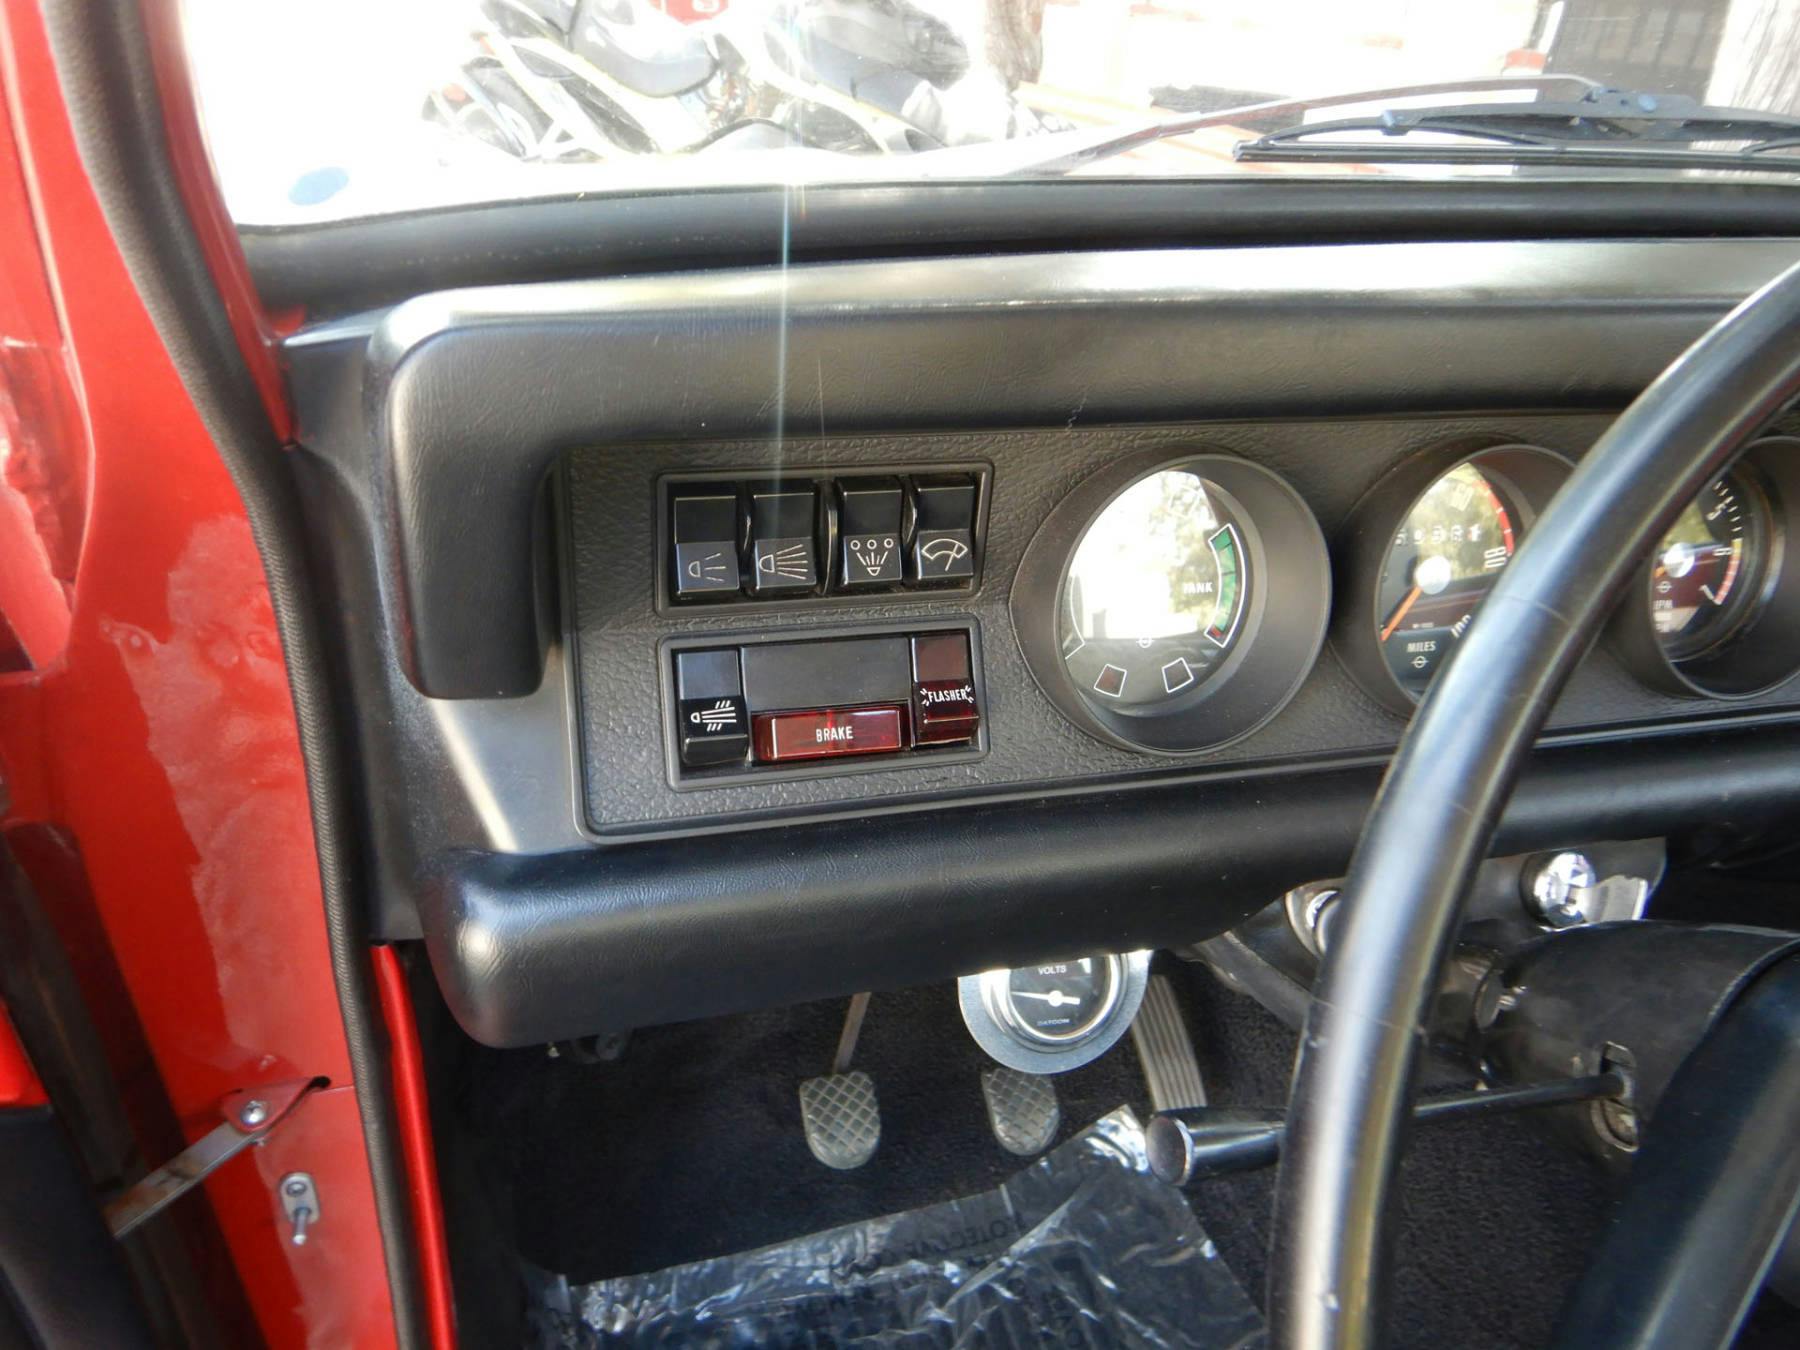 1968 Opel Kadett Deluxe Wagon interior dash